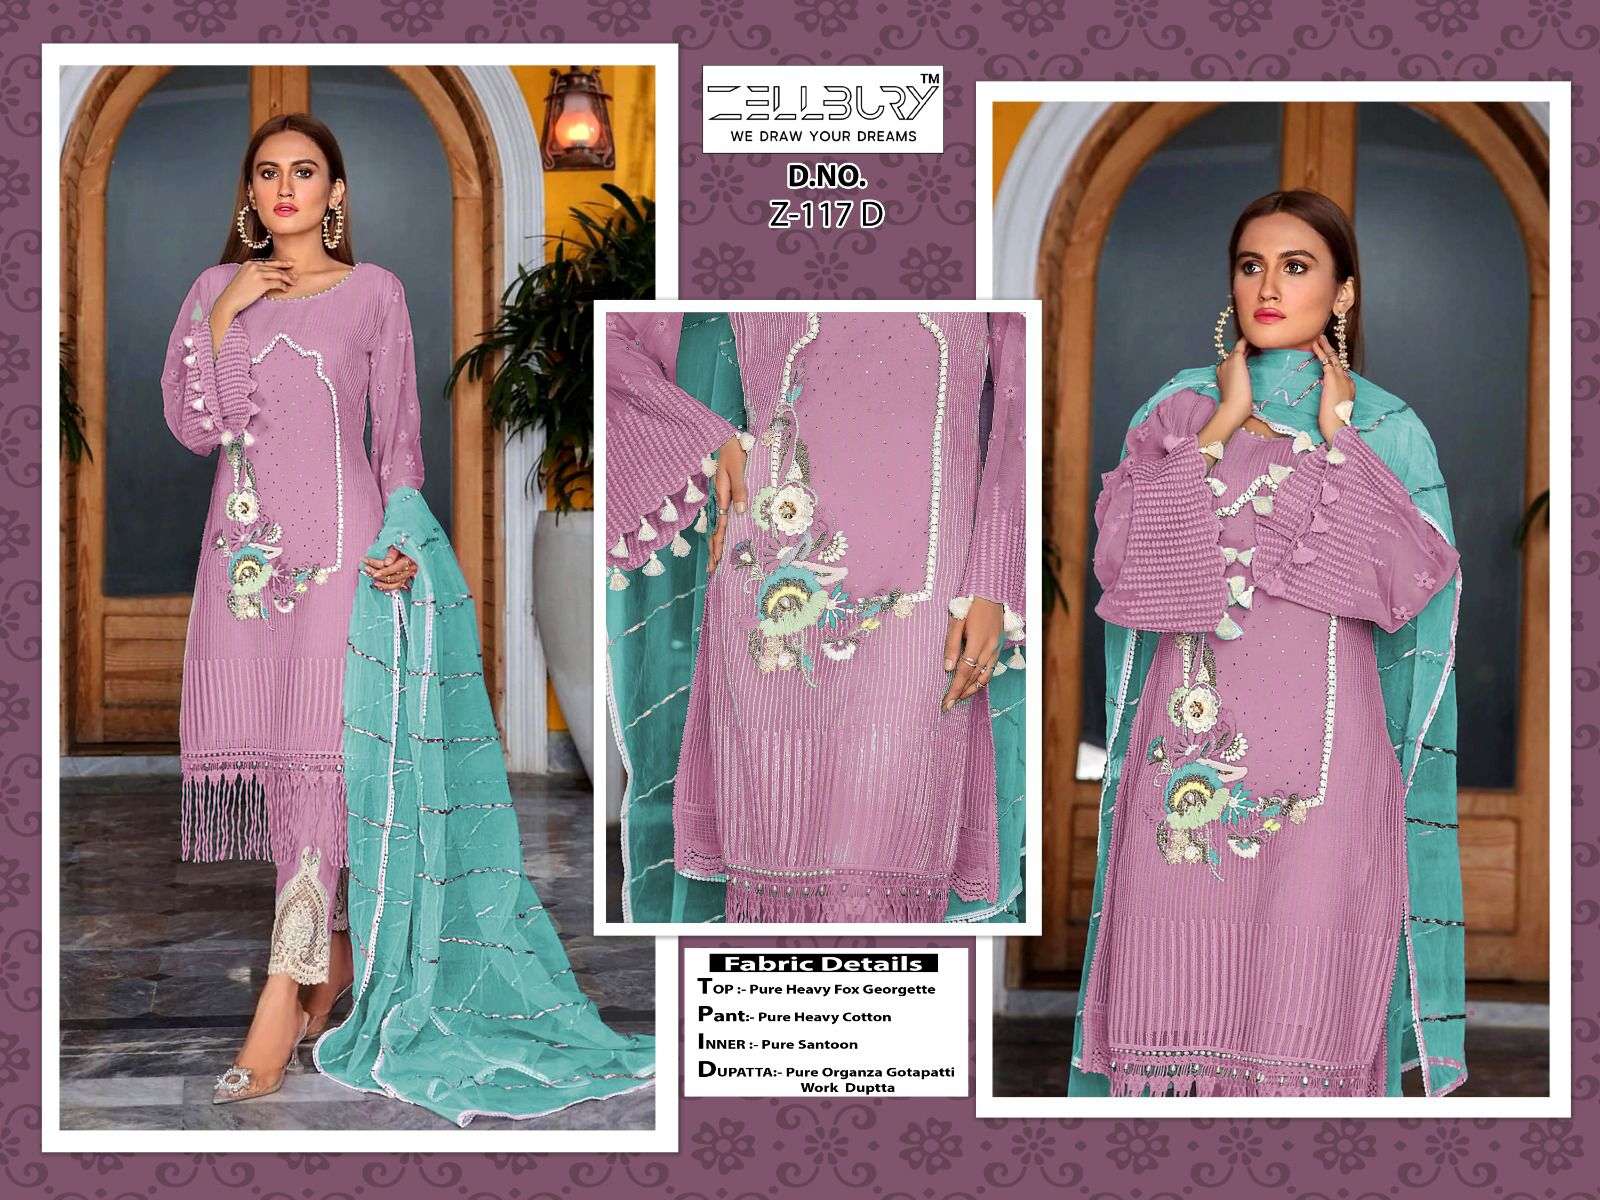 zellbury 117 series stylish look designer pakistani salwar suits latest collection surat